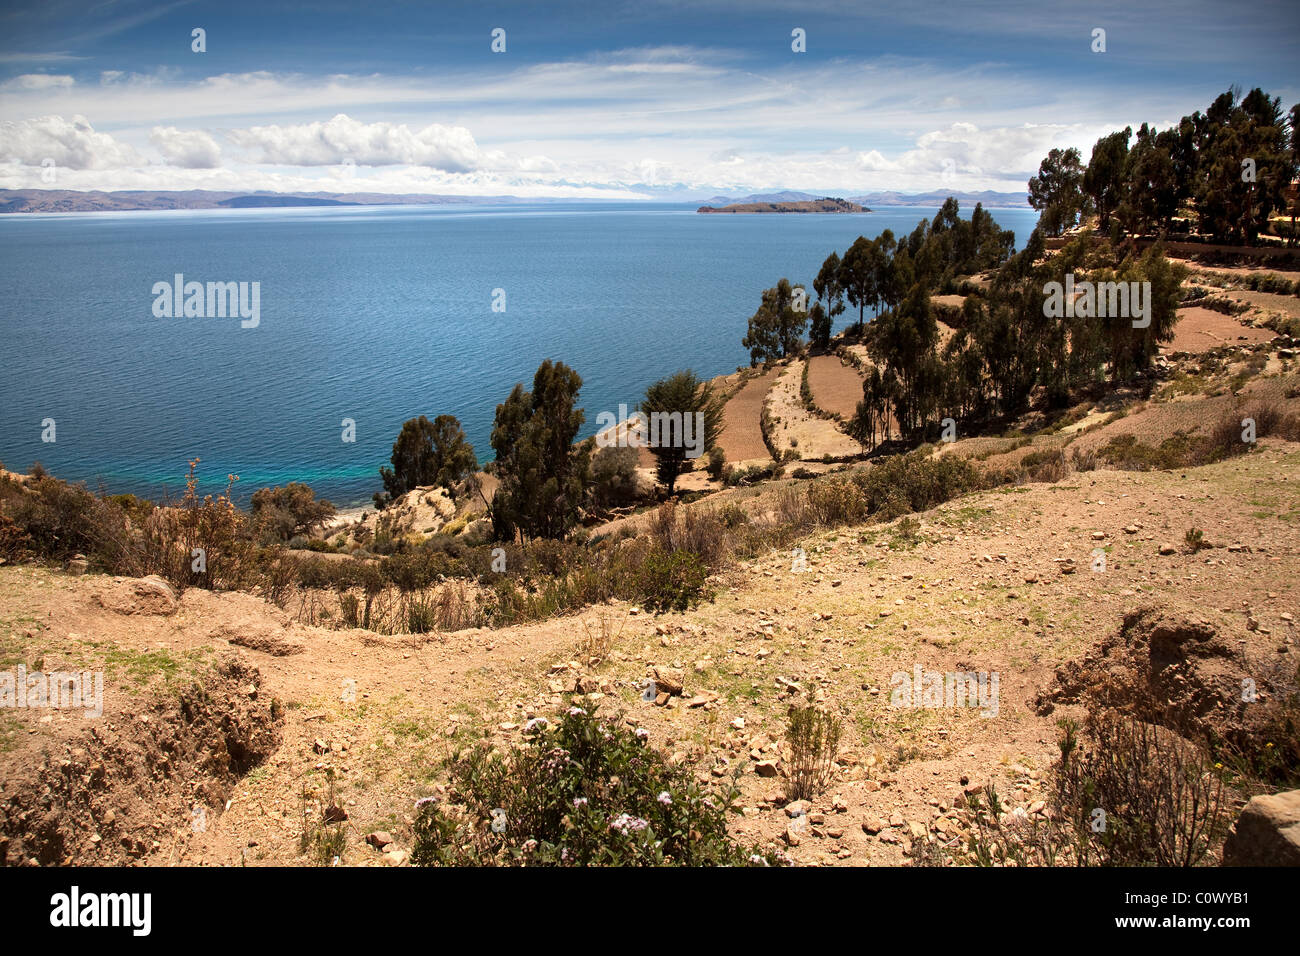 Views of Lake Titicaca from Sun Island, Bolivia, South America. Stock Photo